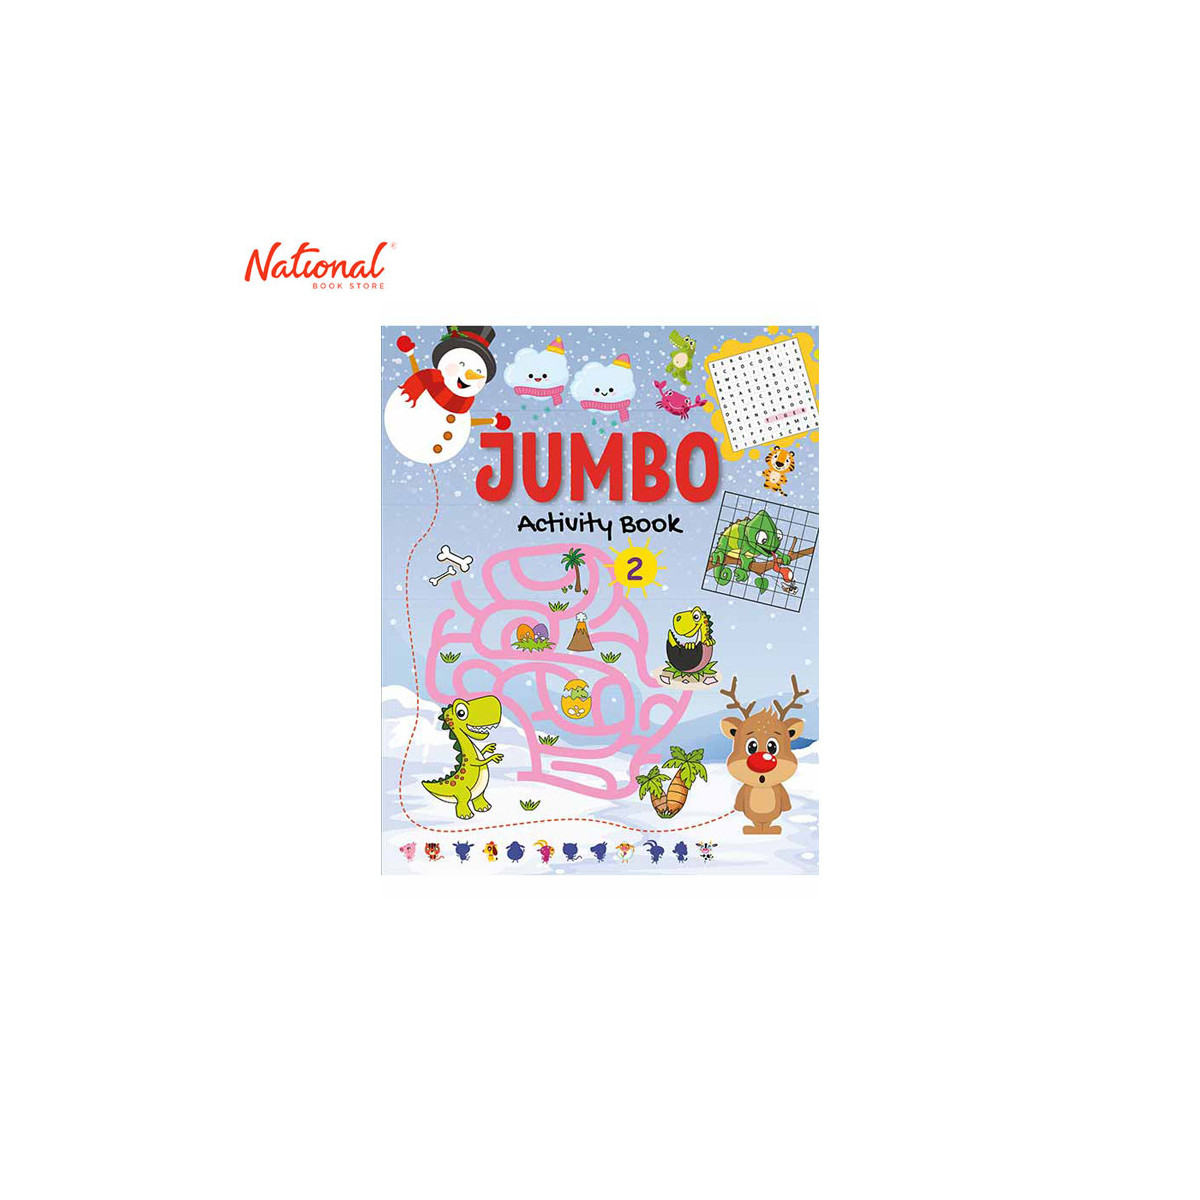 Jumbo Activity Book 2 Trade Paperback by Pegasus